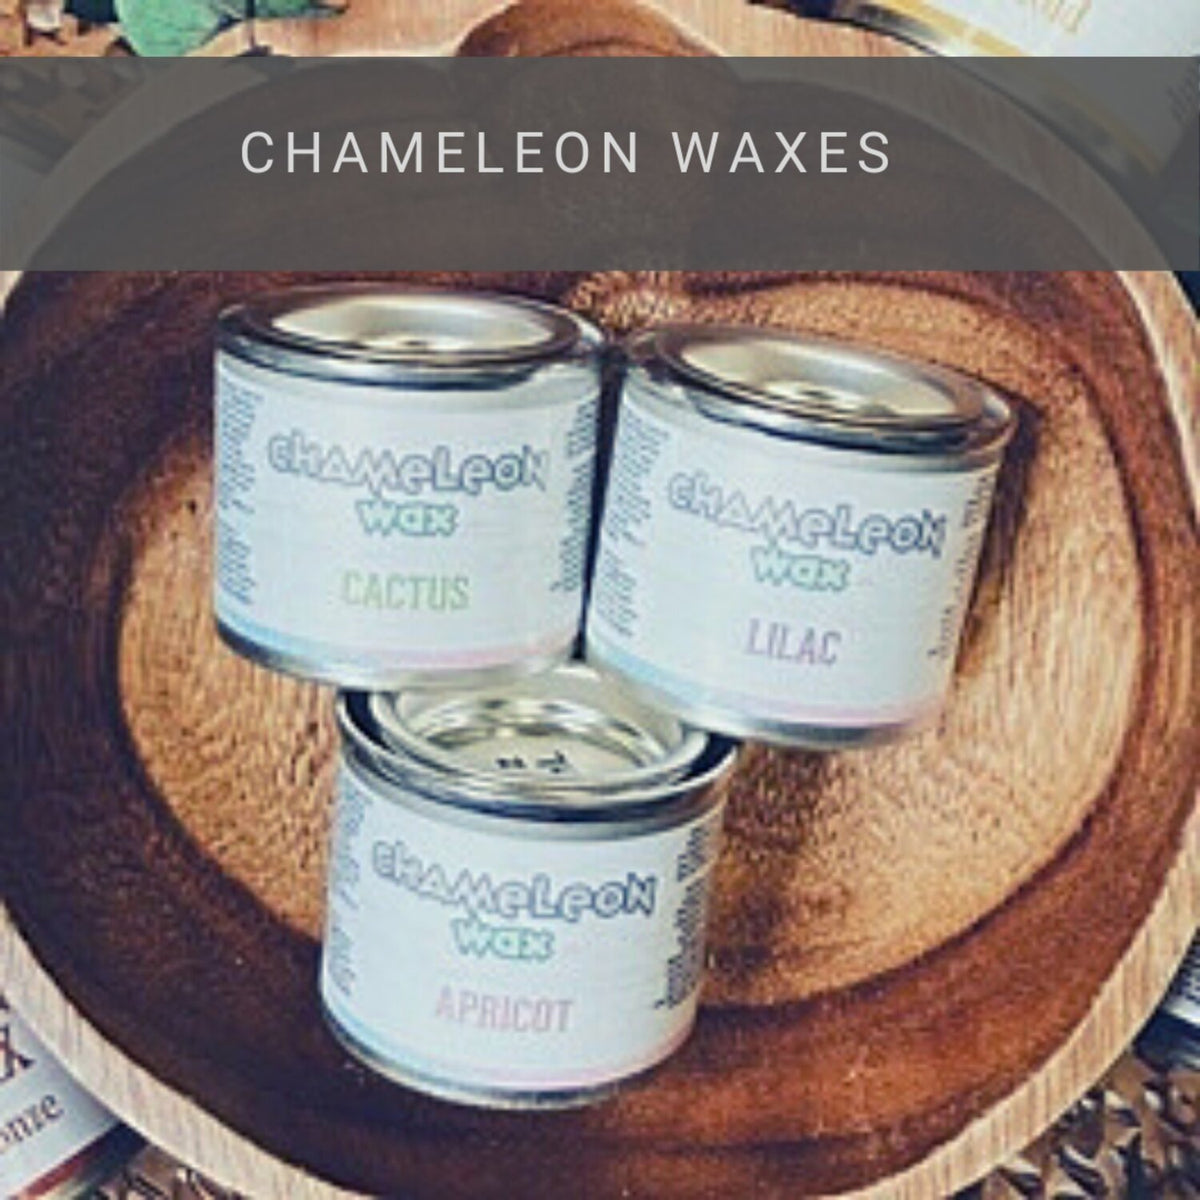 Gilding Wax/chameleon Wax Dixie Belle Furniture Wax 